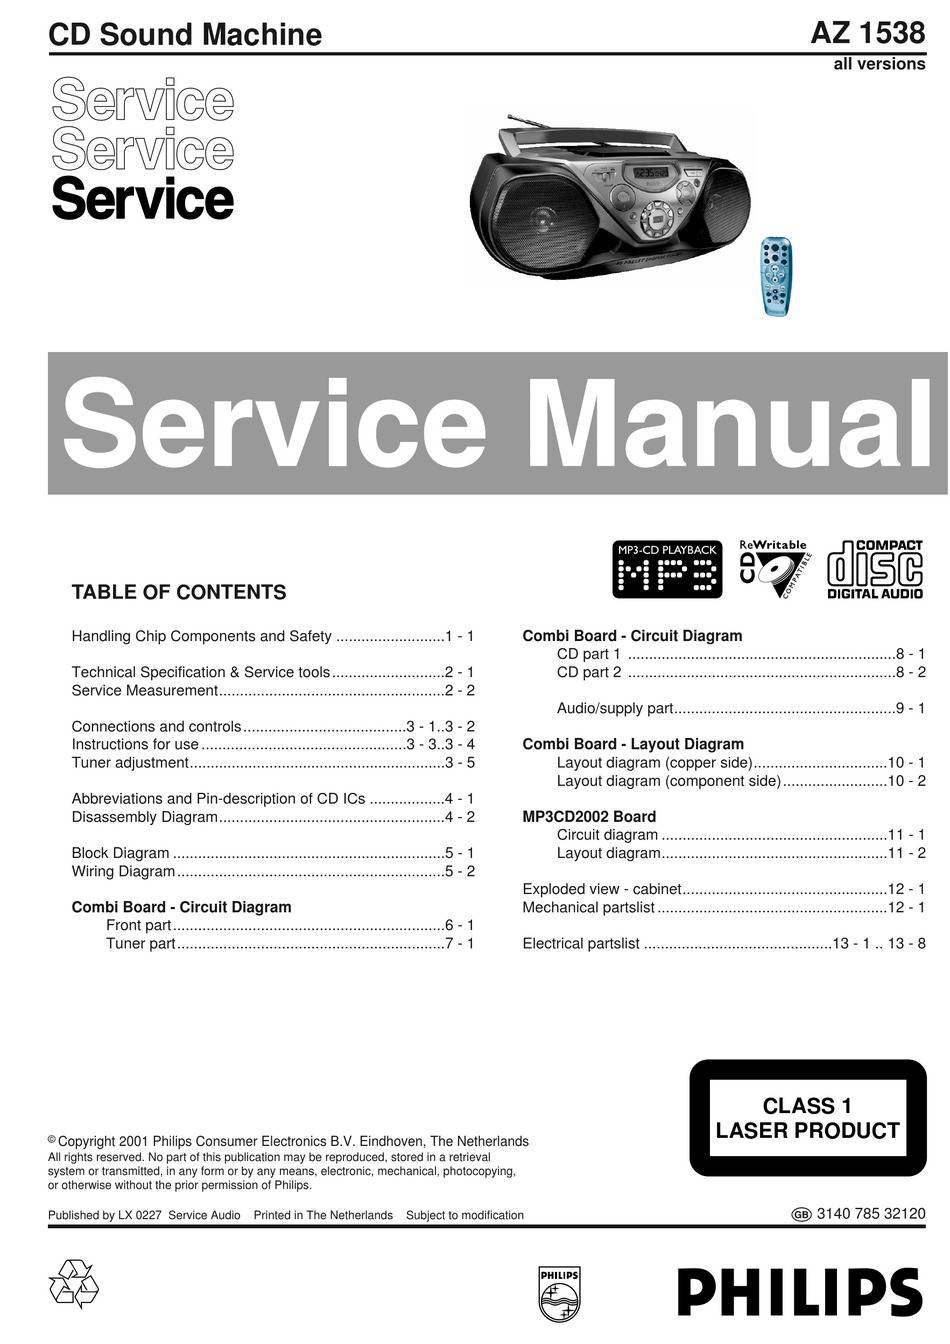 Service manual philips. Магнитола Philips az 1538. Philips az 6823 service manual. Сервис мануал Philips az1138. Philips az4000.